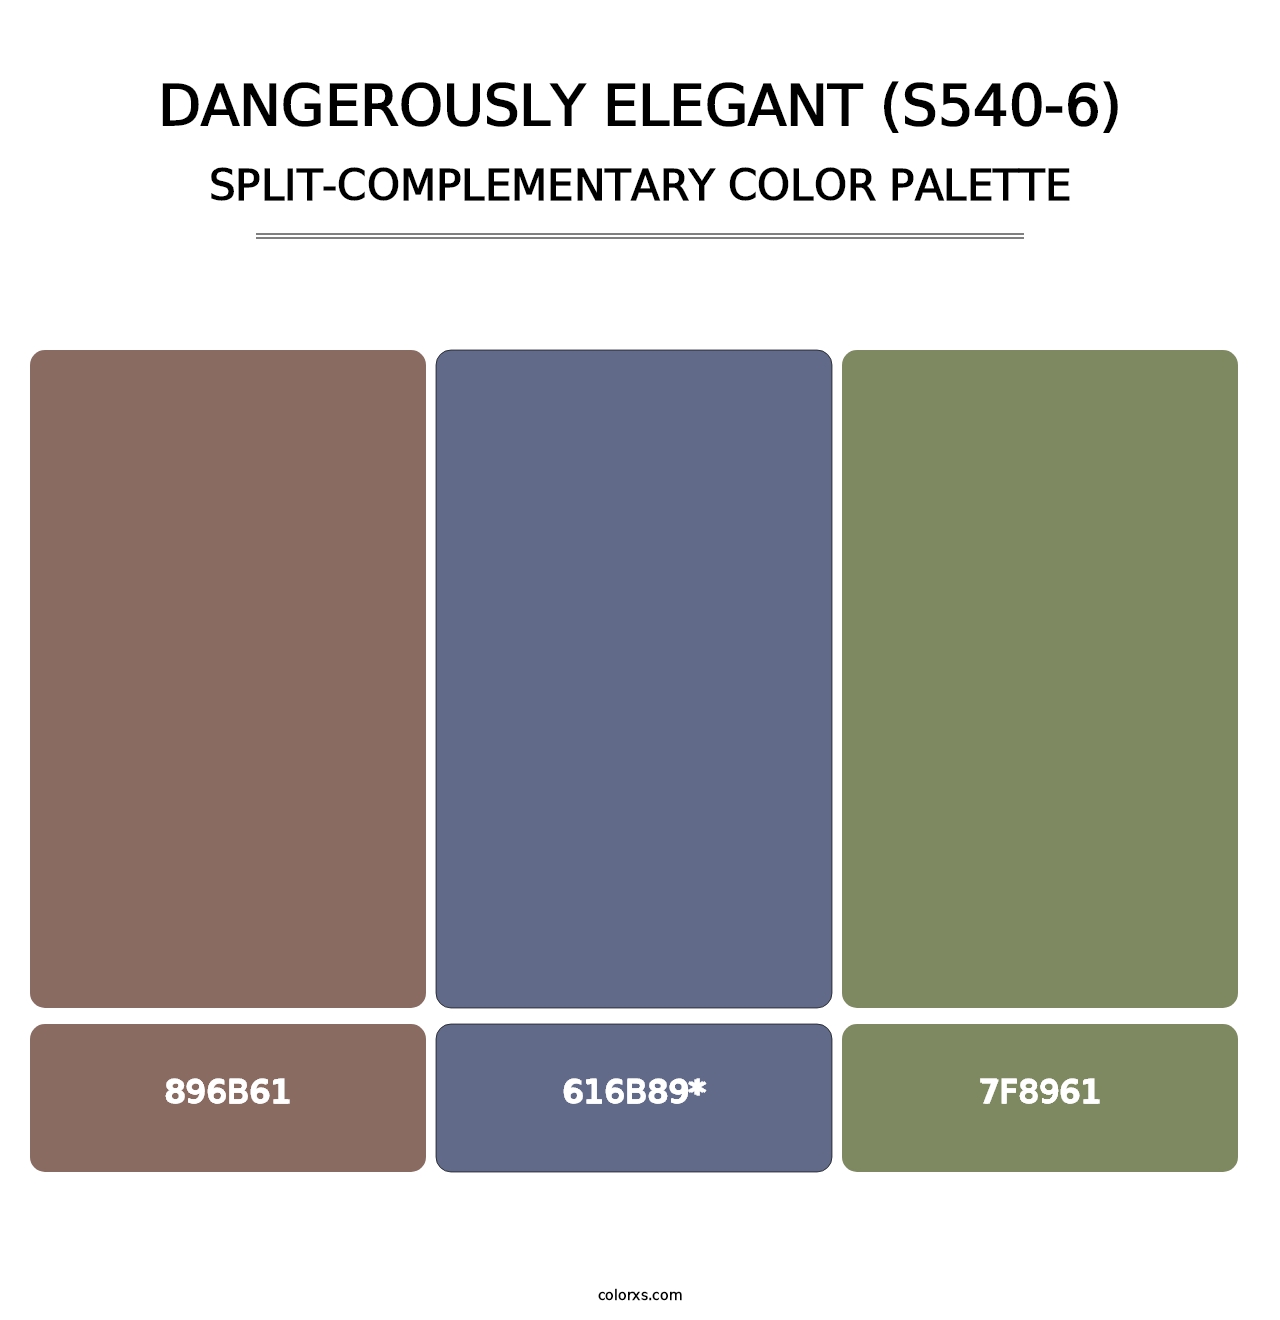 Dangerously Elegant (S540-6) - Split-Complementary Color Palette